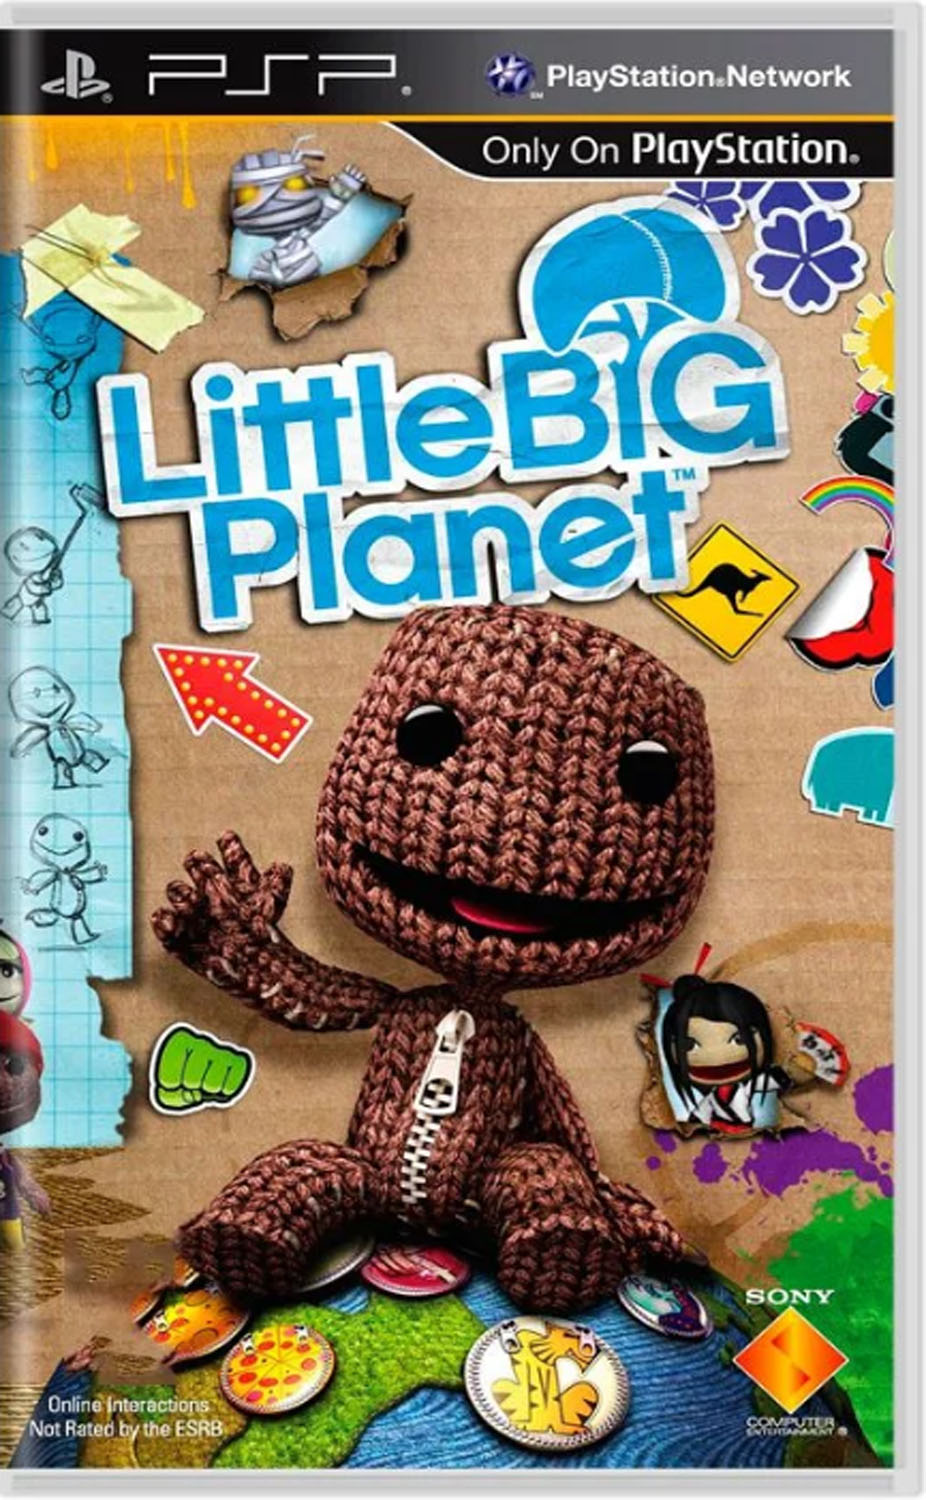 Little Big Planet - PSP (PlayStation Portable) - Usado